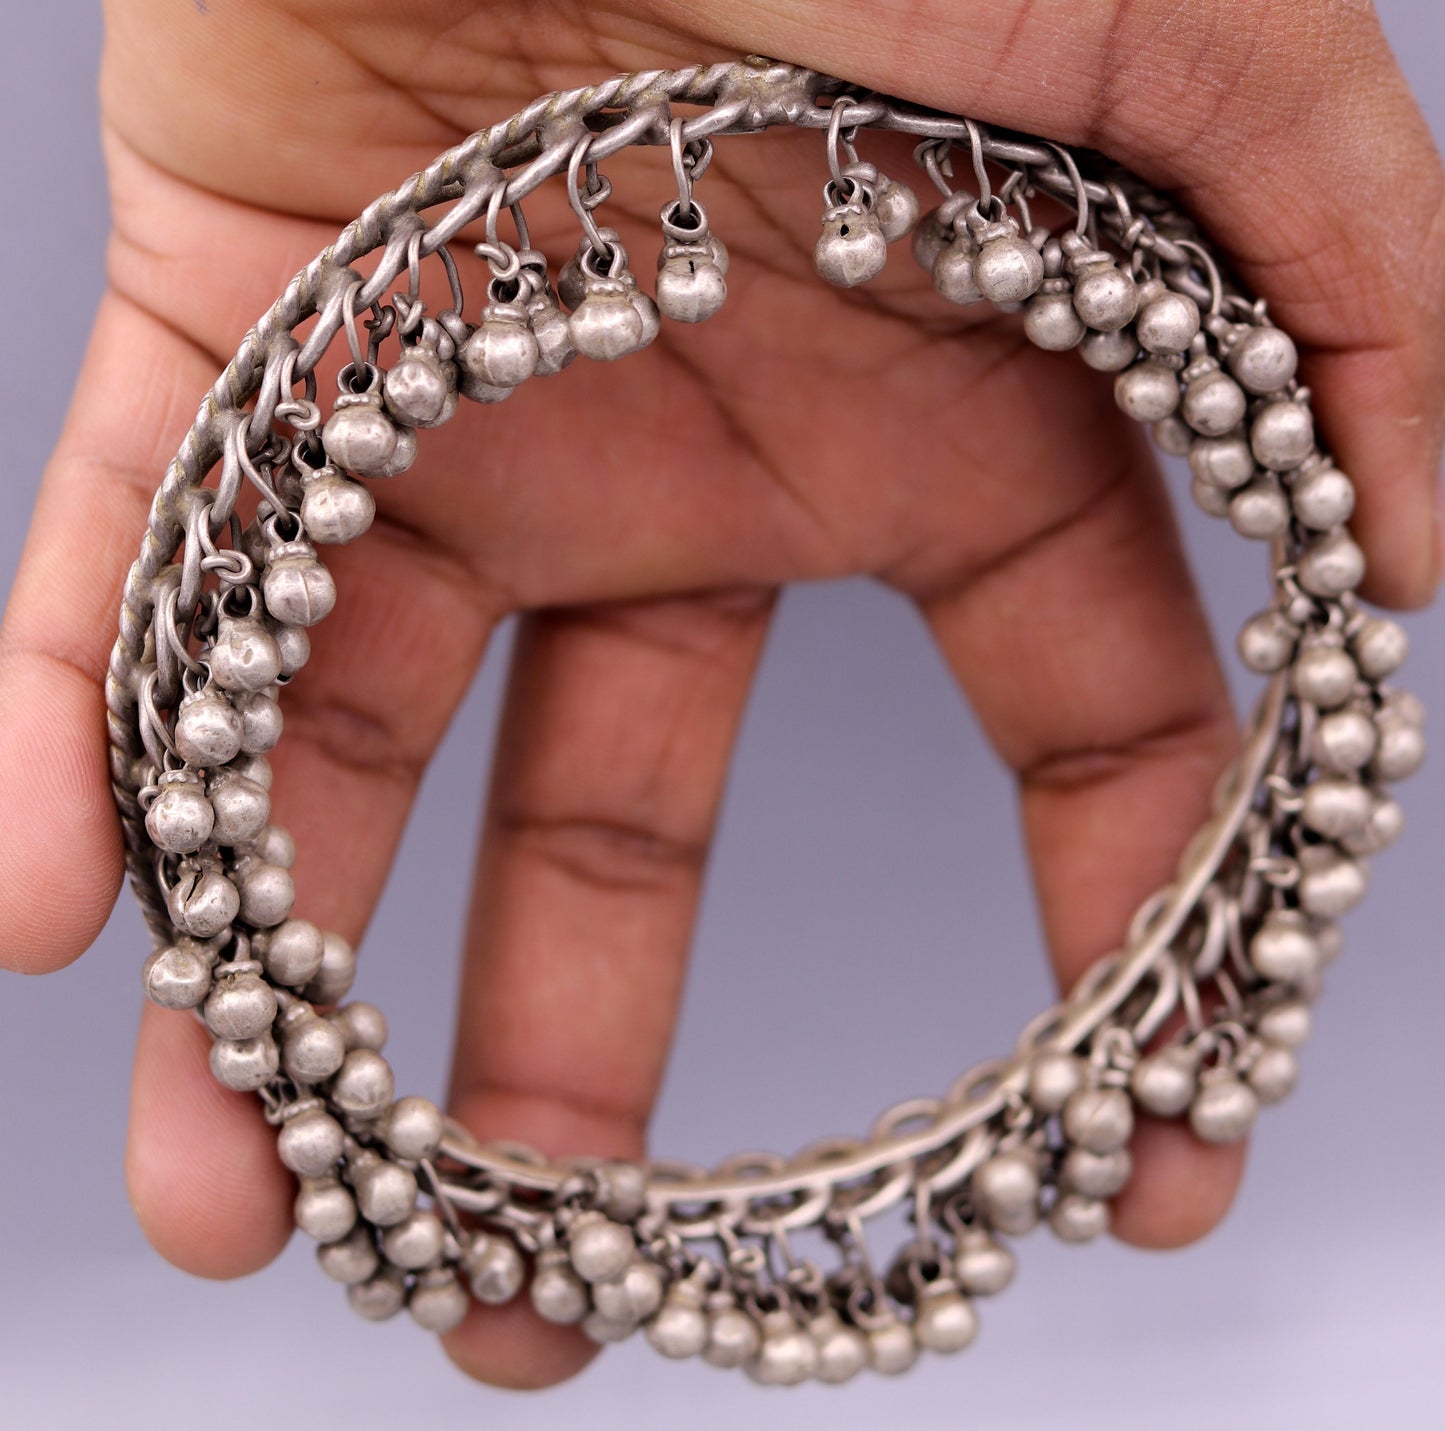 Vintage handmade old silver antique foot bracelet anklet kada ankle bracelet with fabulous bells women's tribal jewelry belly dance sfk06 - TRIBAL ORNAMENTS